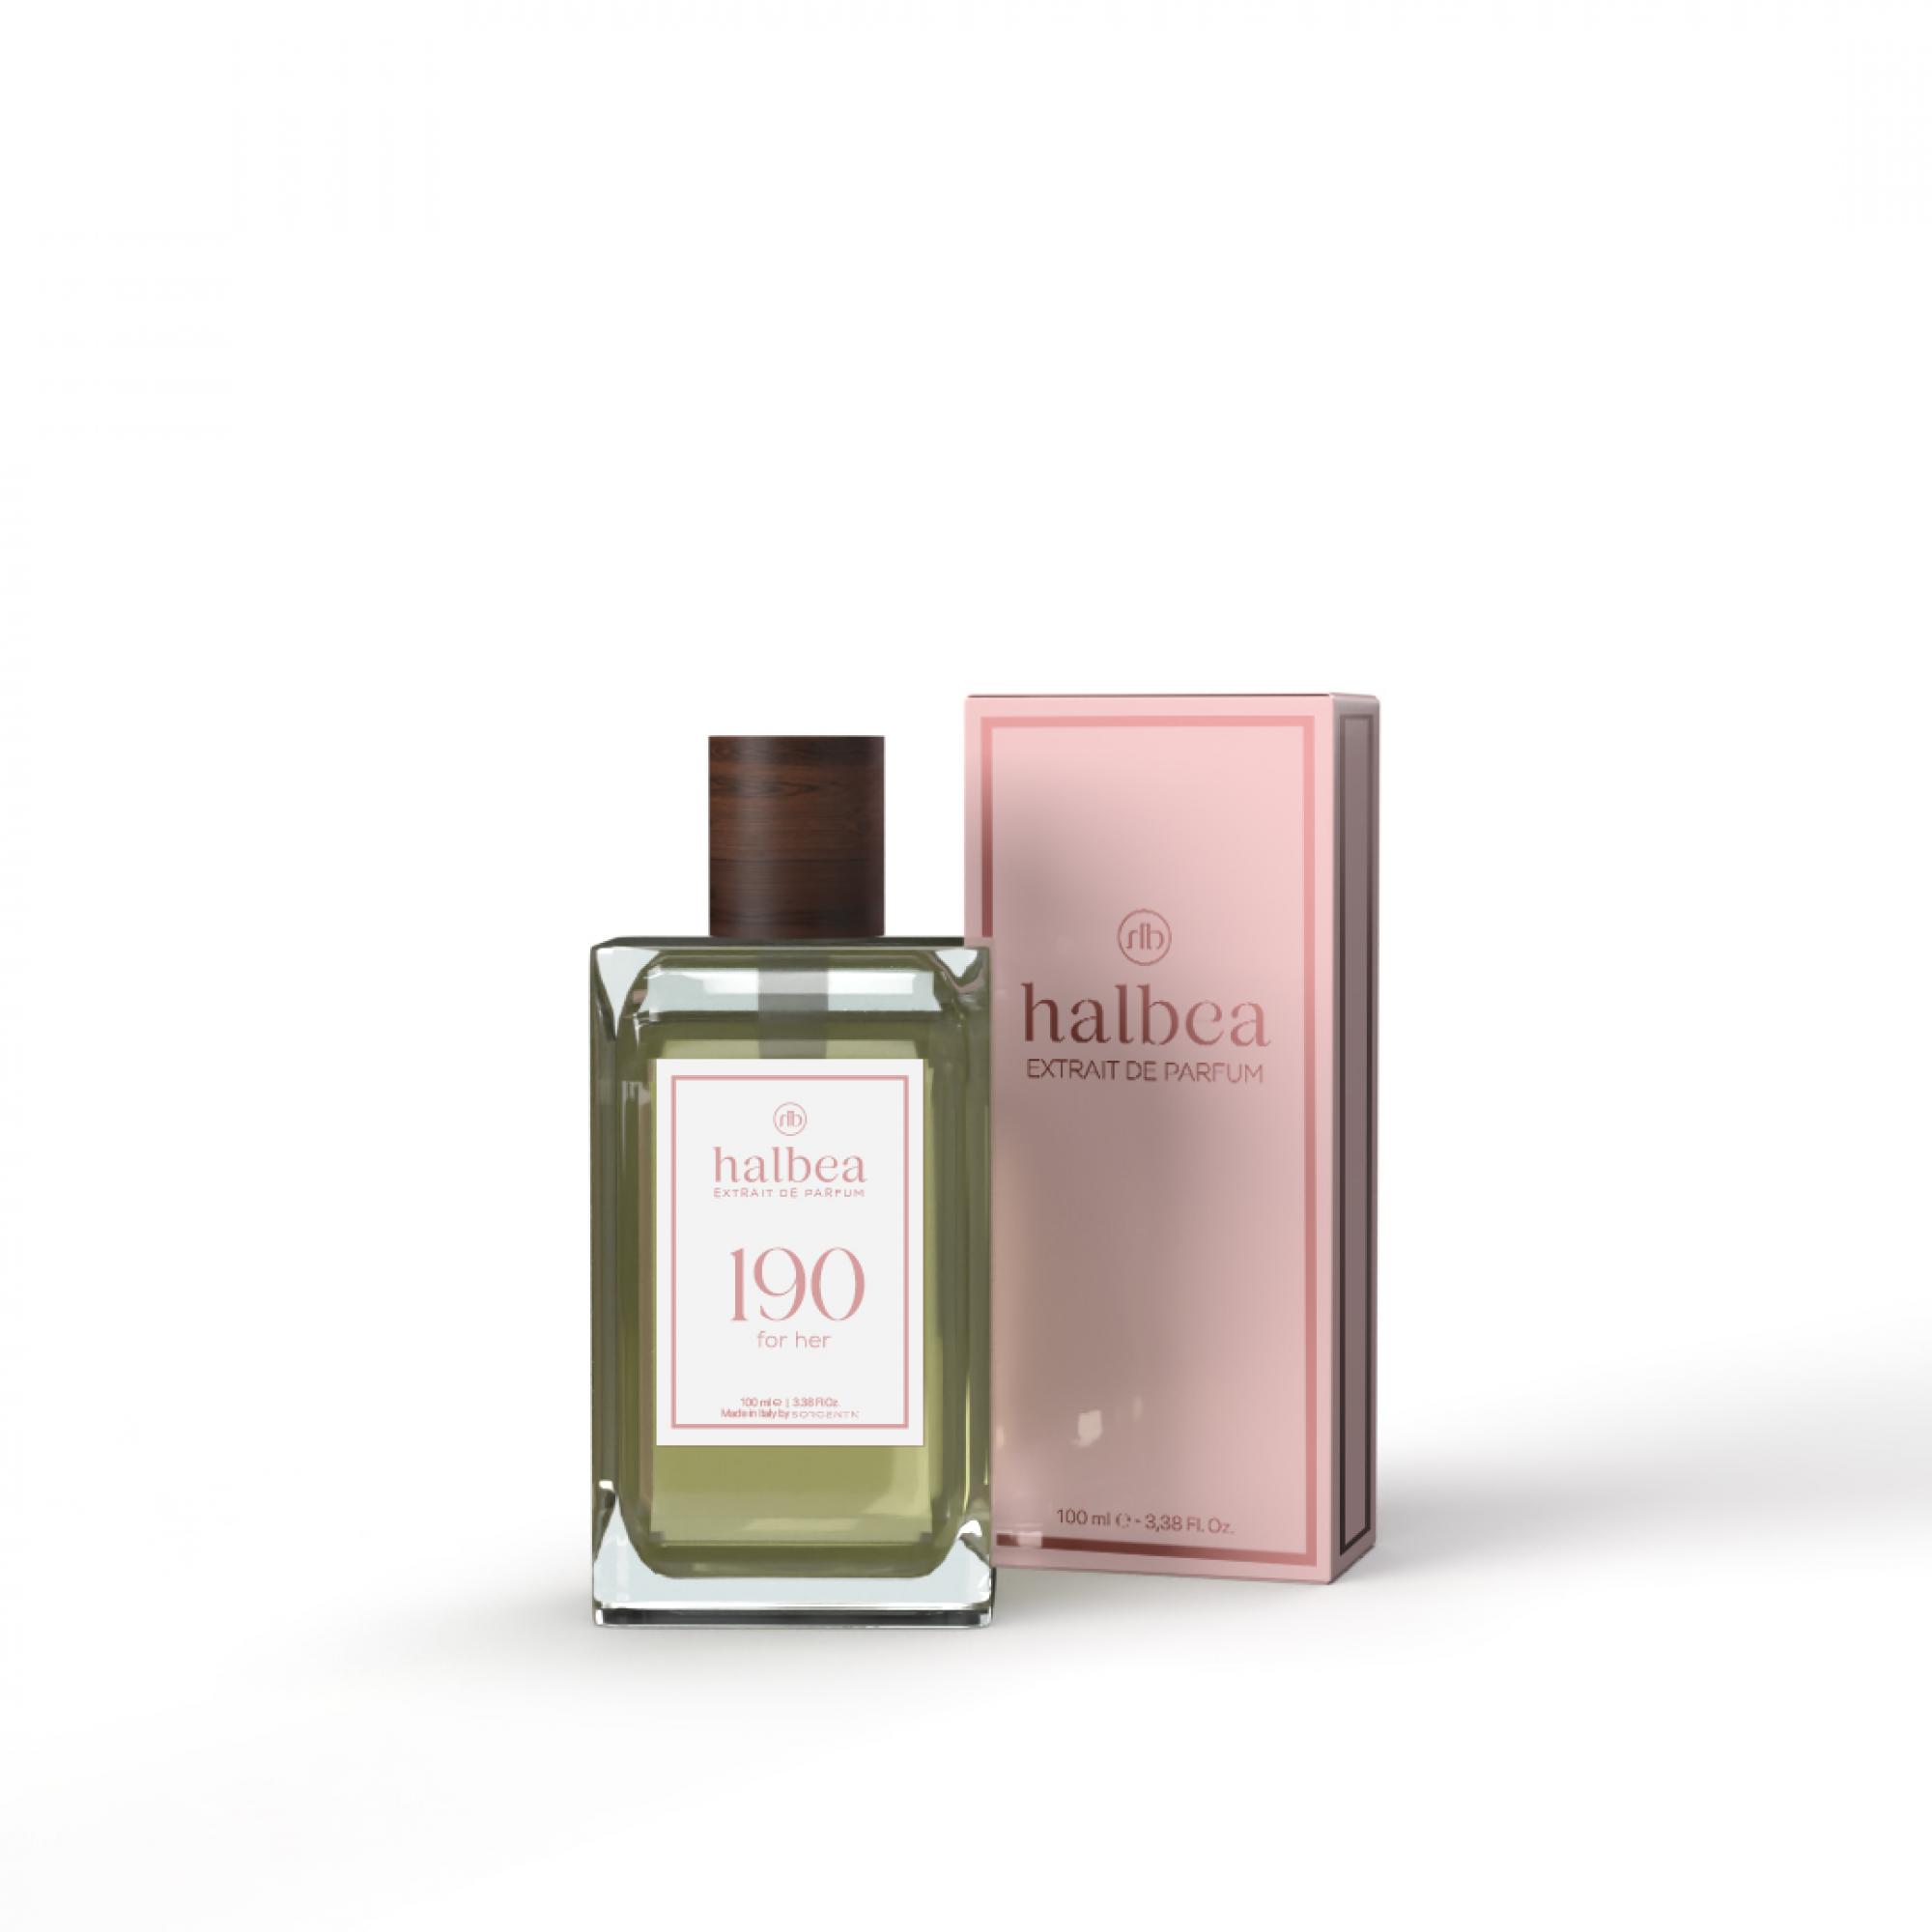 Halbea Parfum Nr. 190 insp. by Carolina Herrera Very Good Girl Sorgenta 100ml